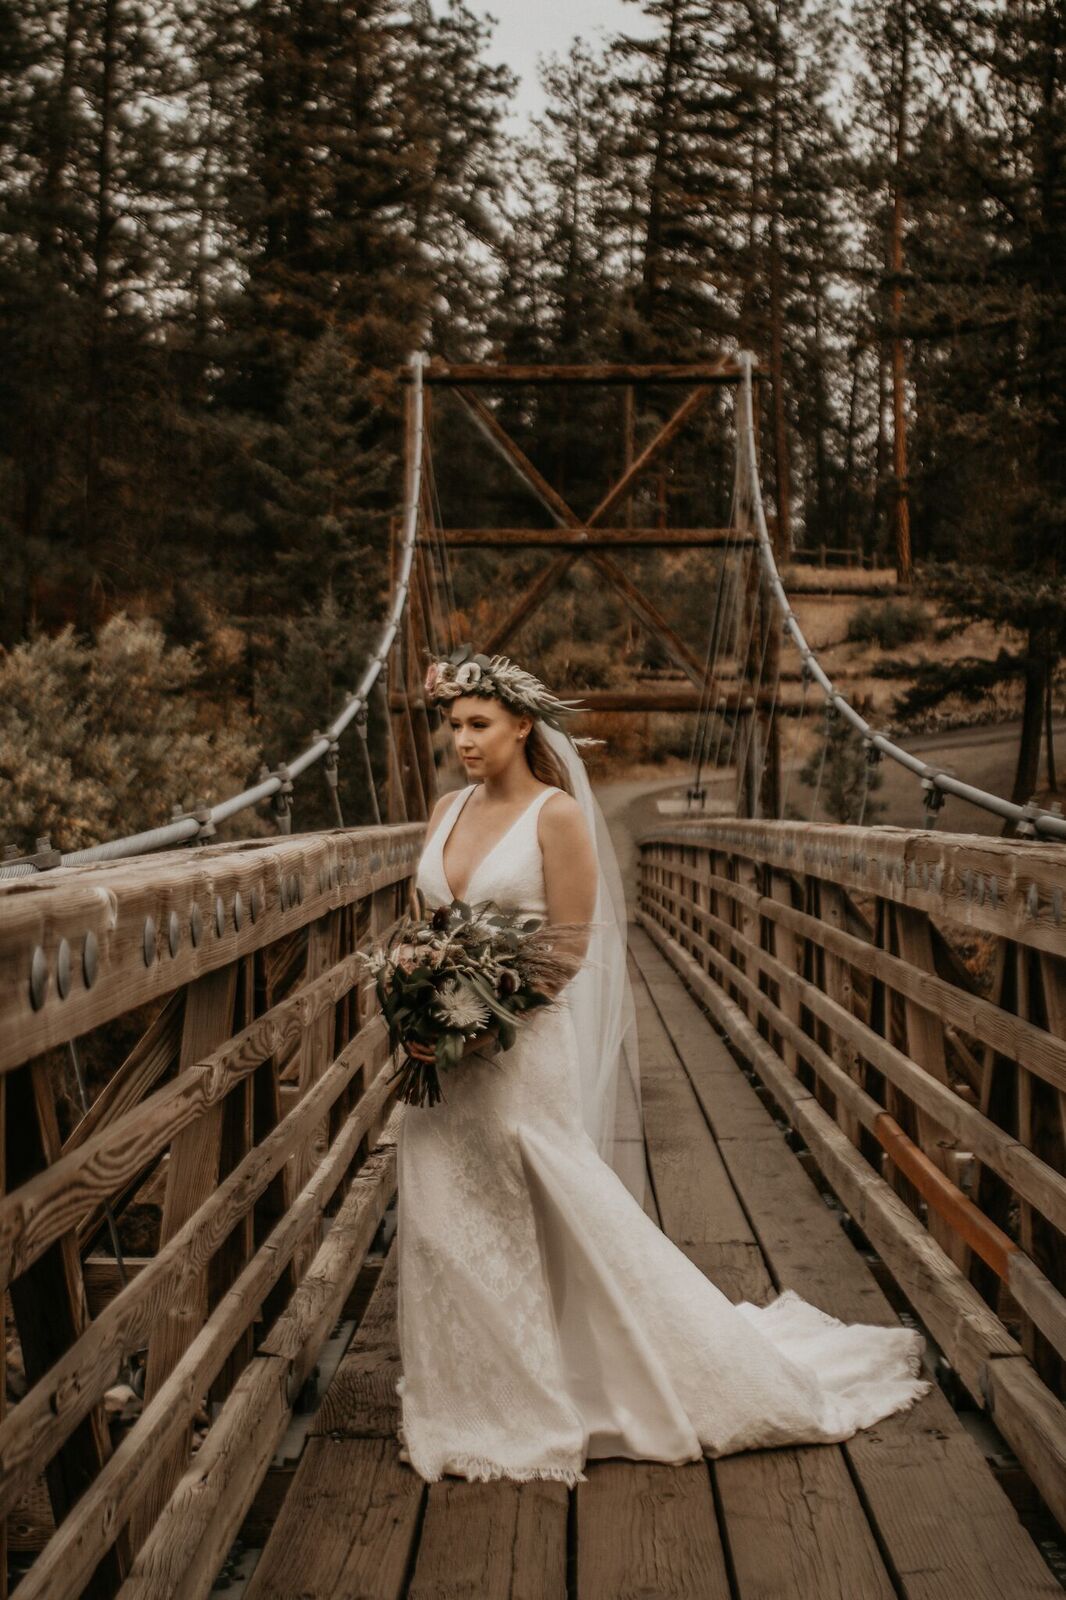 spokane river wedding photo shoot image10